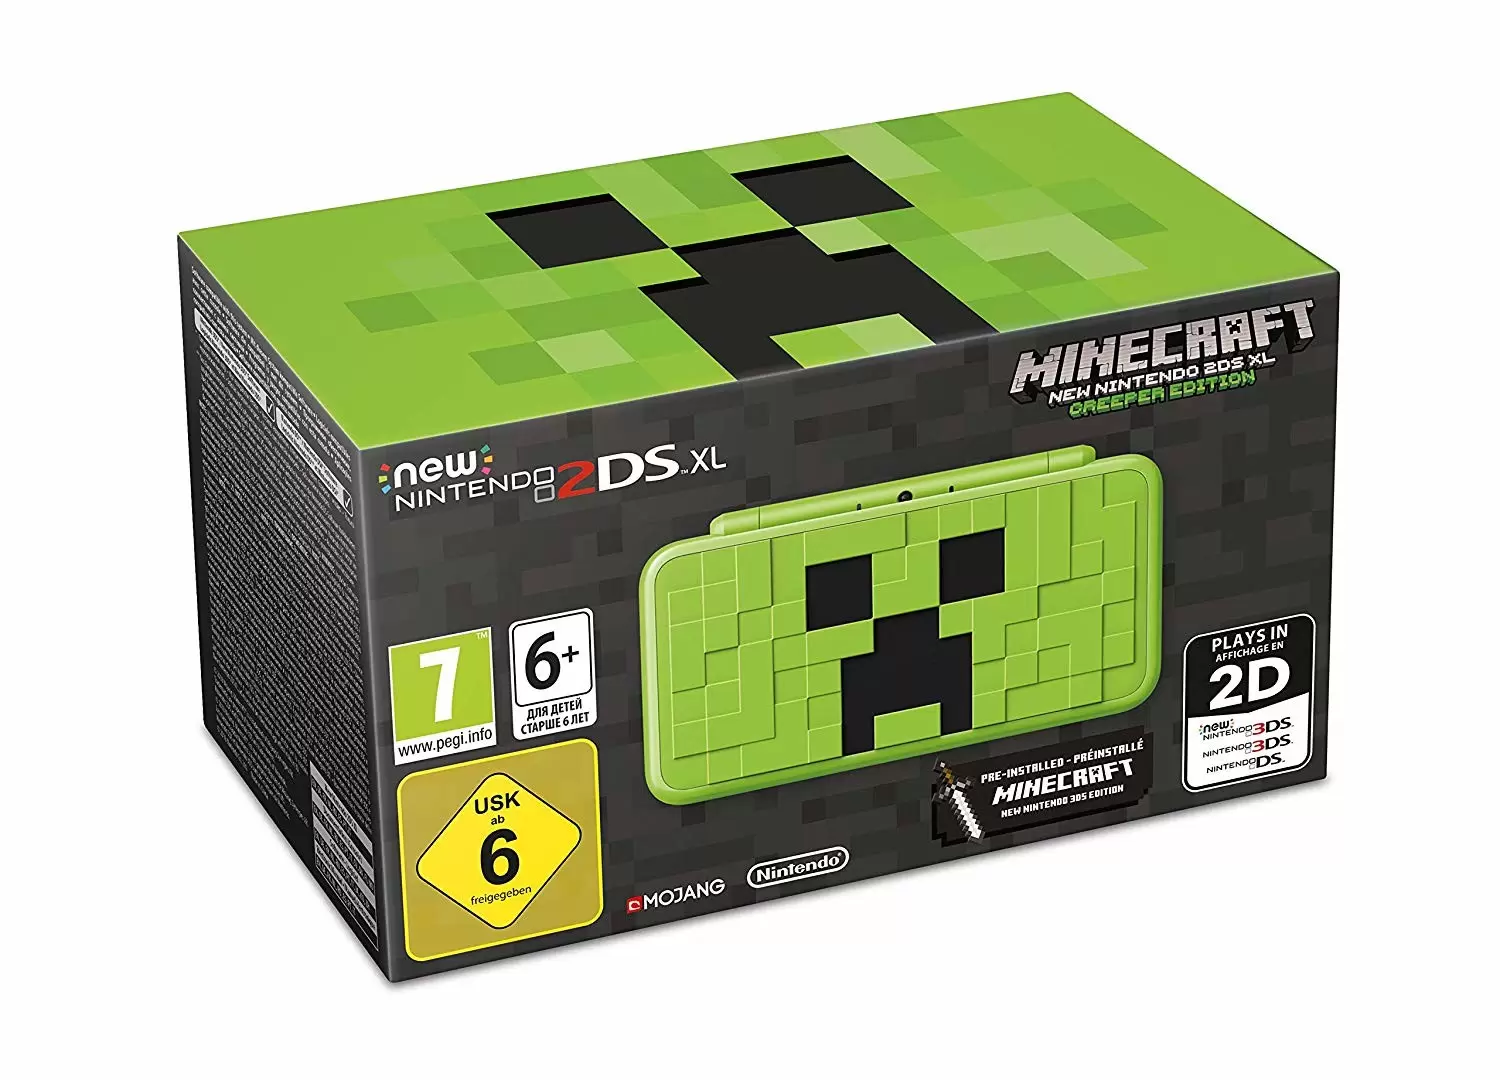 Nintendo 2DS Stuff - New Nintendo 2DS XL Minecraft - Creeper Edition